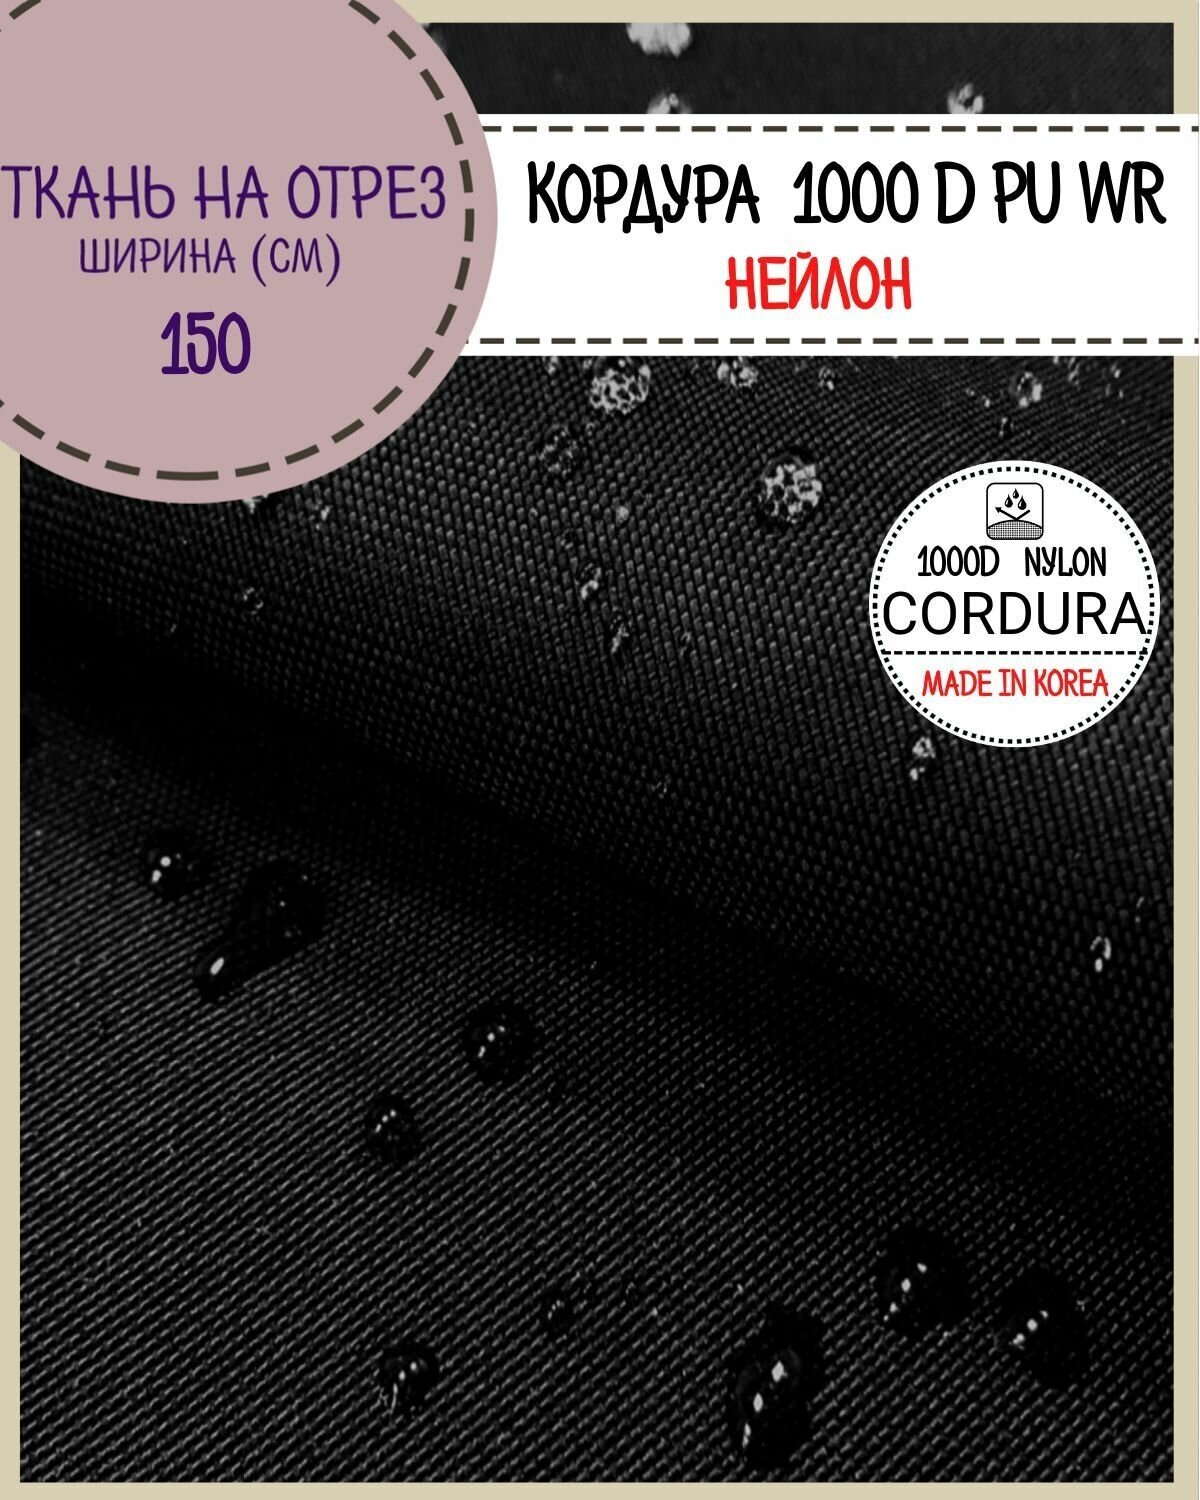 Ткань Кордура (Cordura) 1000D PU/DWR/нейлон/Южная Корея пропитка водоотталкивающая пл. 300 г/м2 цв. черный ш-150 см на отрез цена за пог. метр